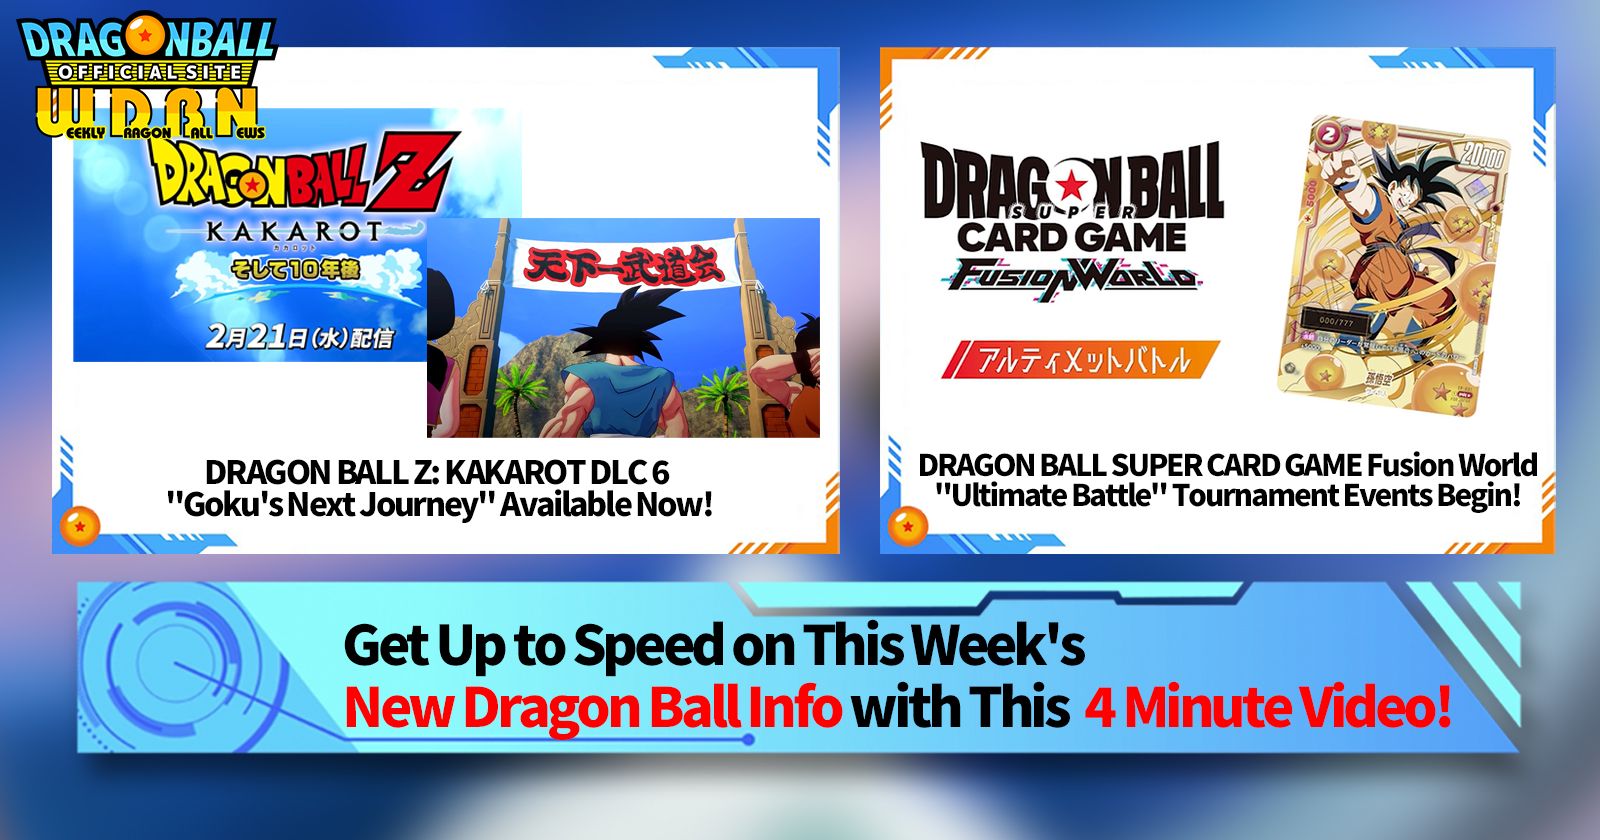 [February 26th] Weekly Dragon Ball News Broadcast!